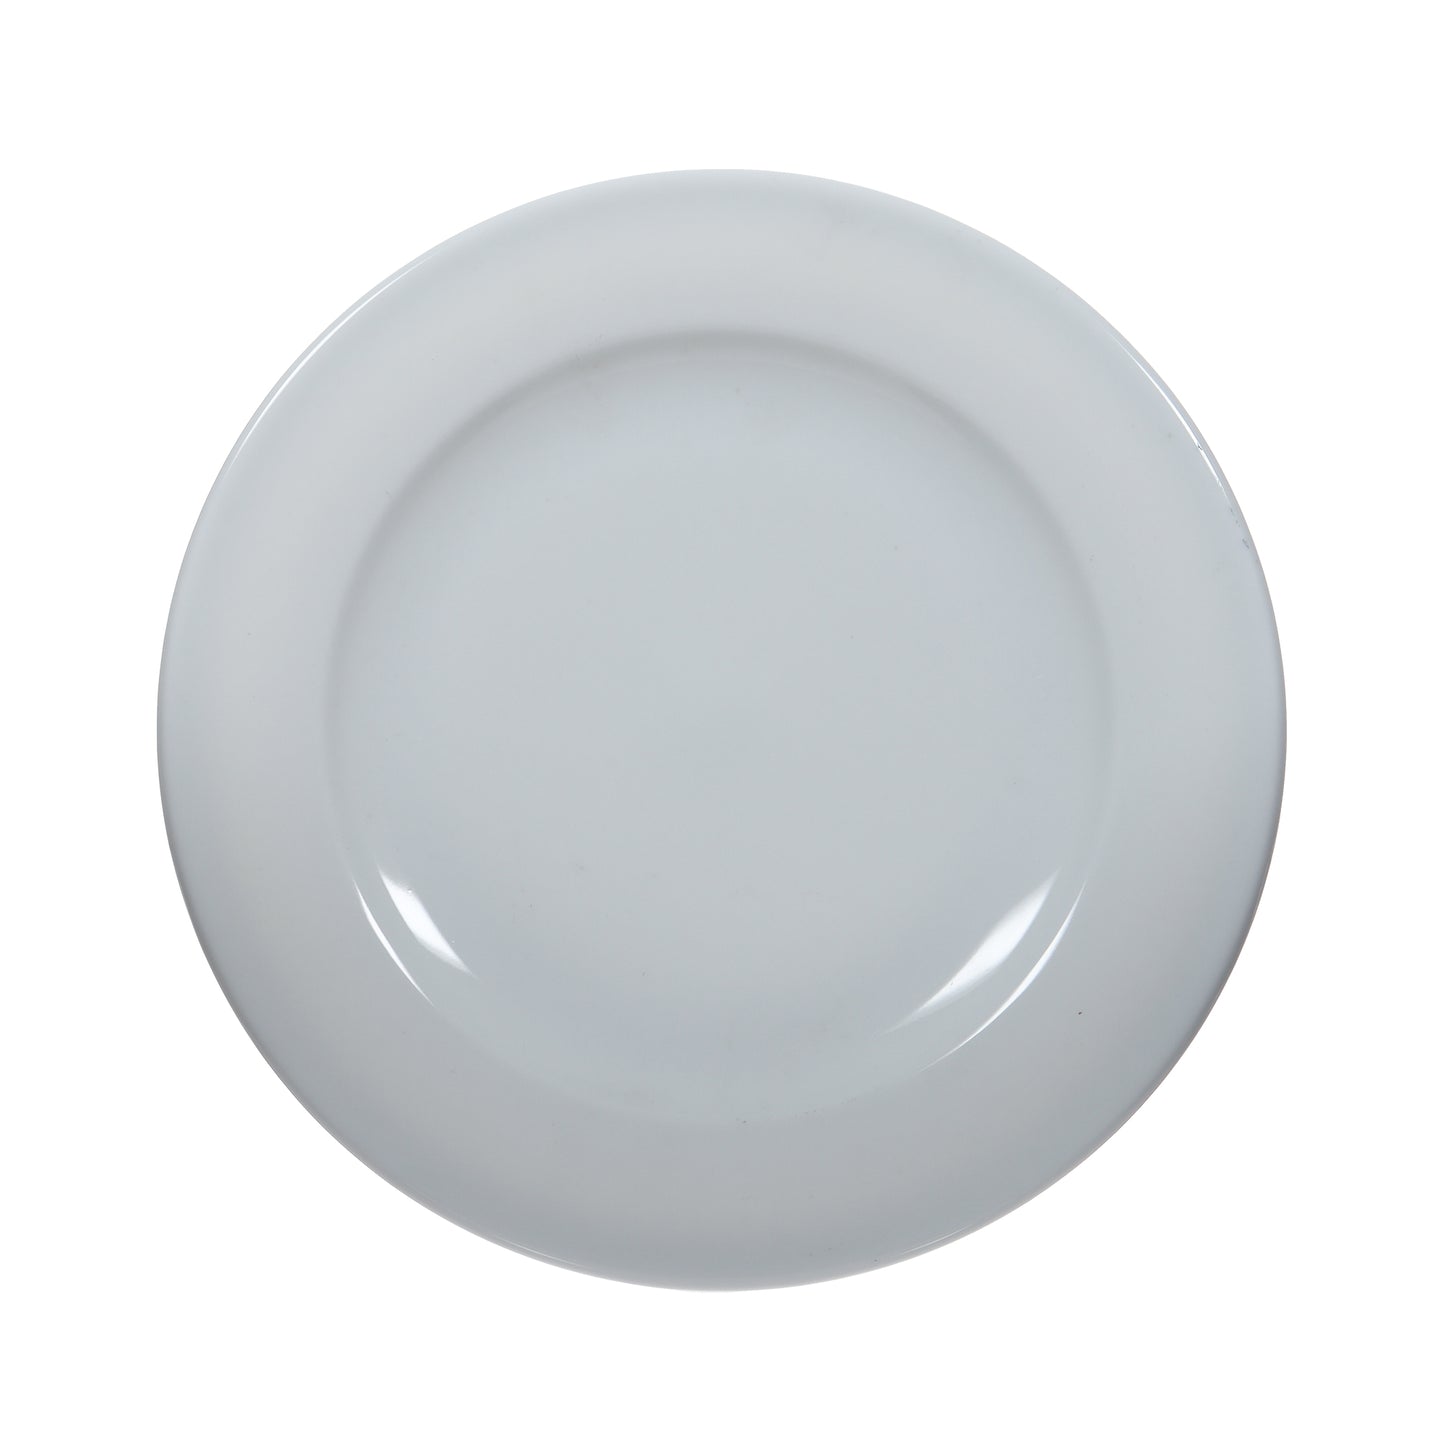 Round Plate with Rim - White